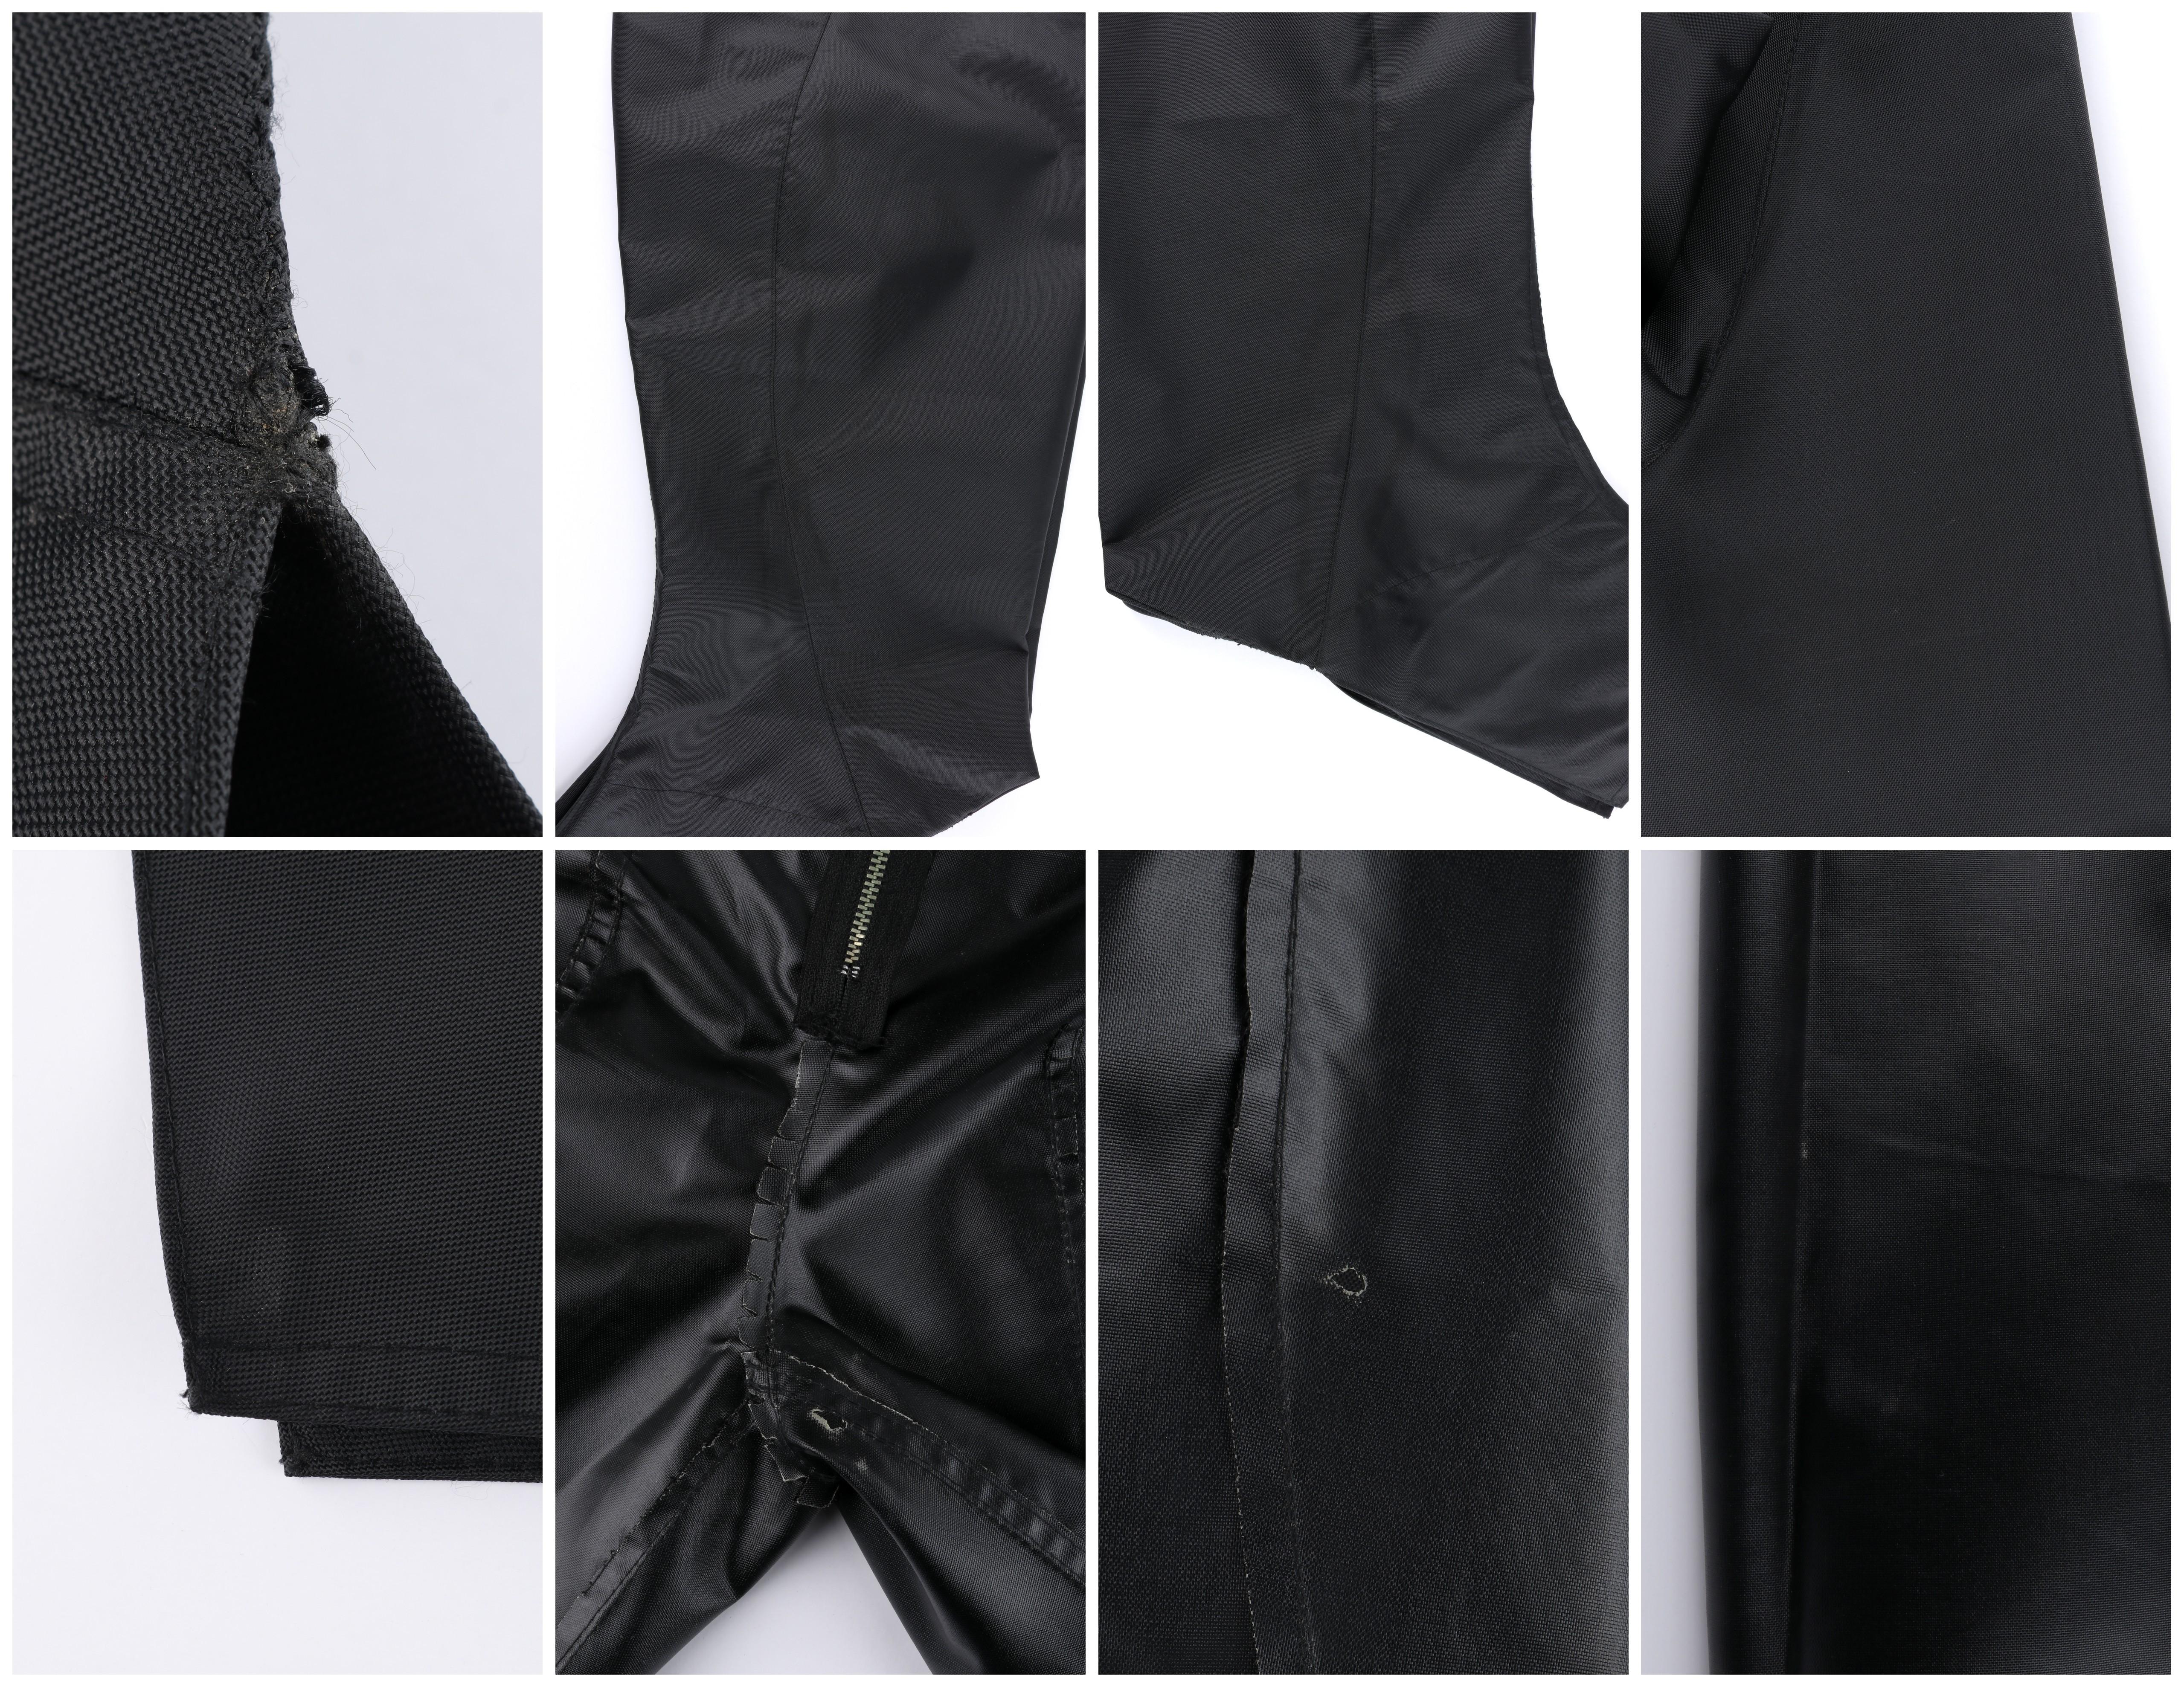 OWEN GASTER c.1996 “Grasshopper” Black Cropped Structured Knicker Trouser Pants For Sale 4